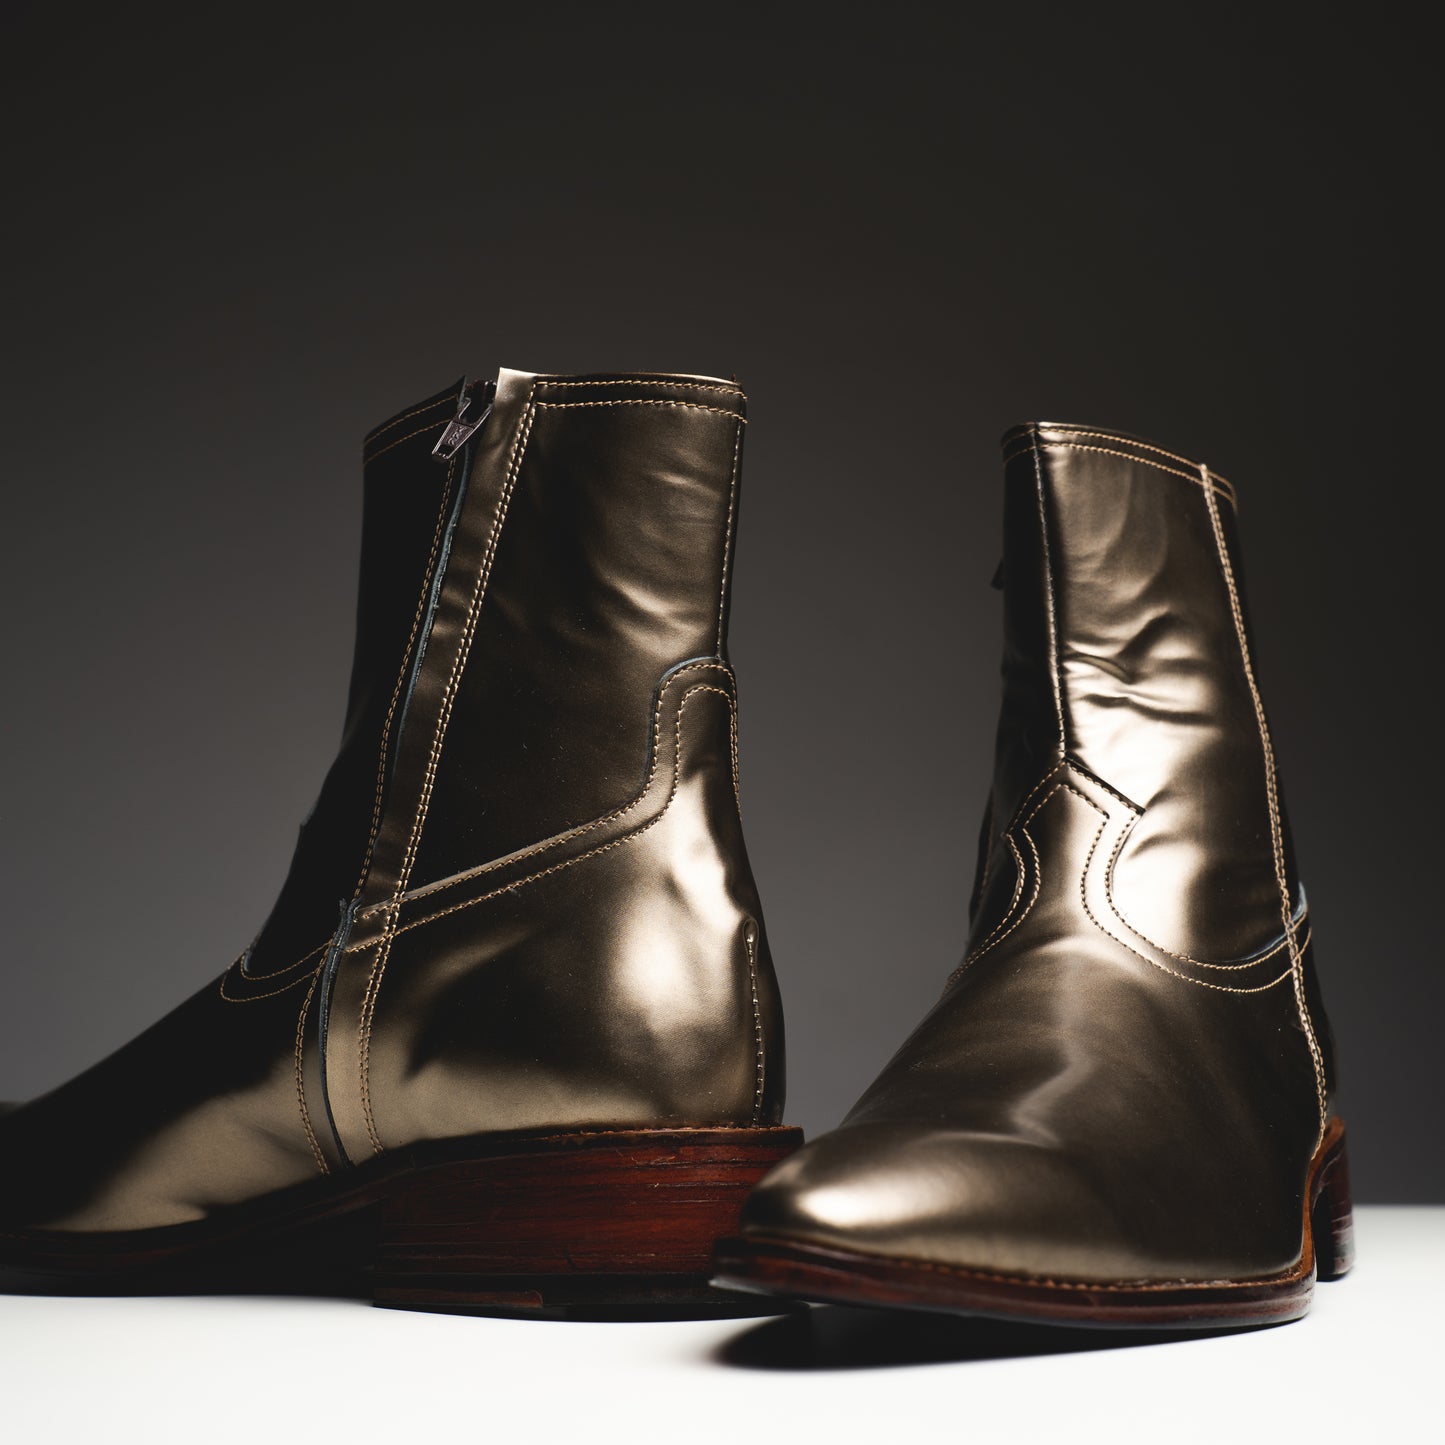 Metallic boots